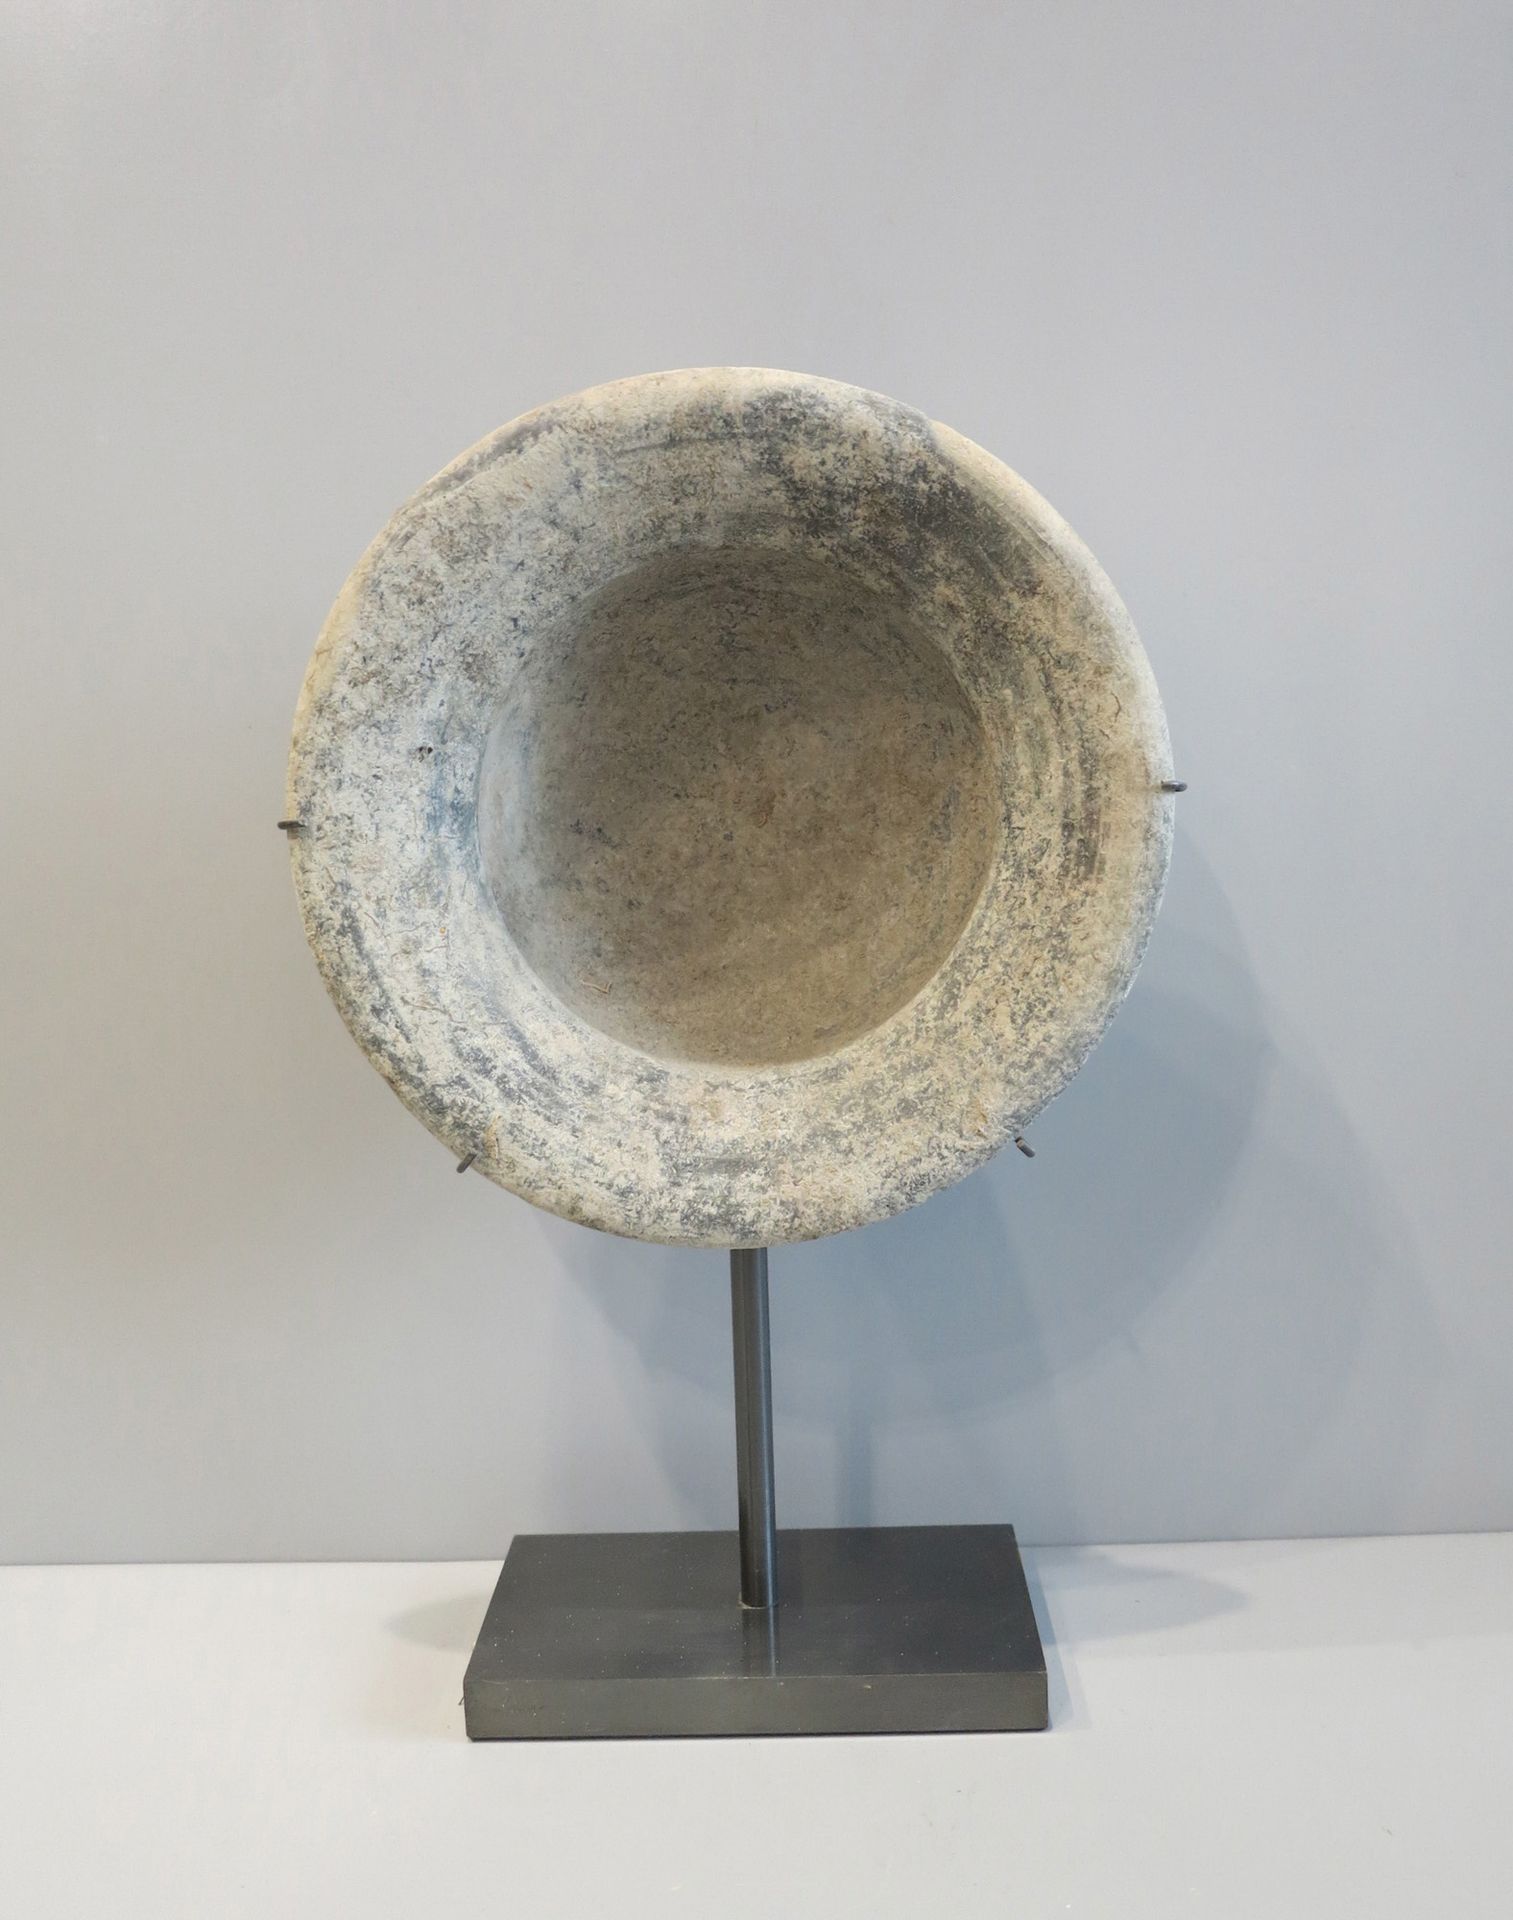 Null Apode bowl on a base. Terracotta.

Thailand, 19th century

21x7cm